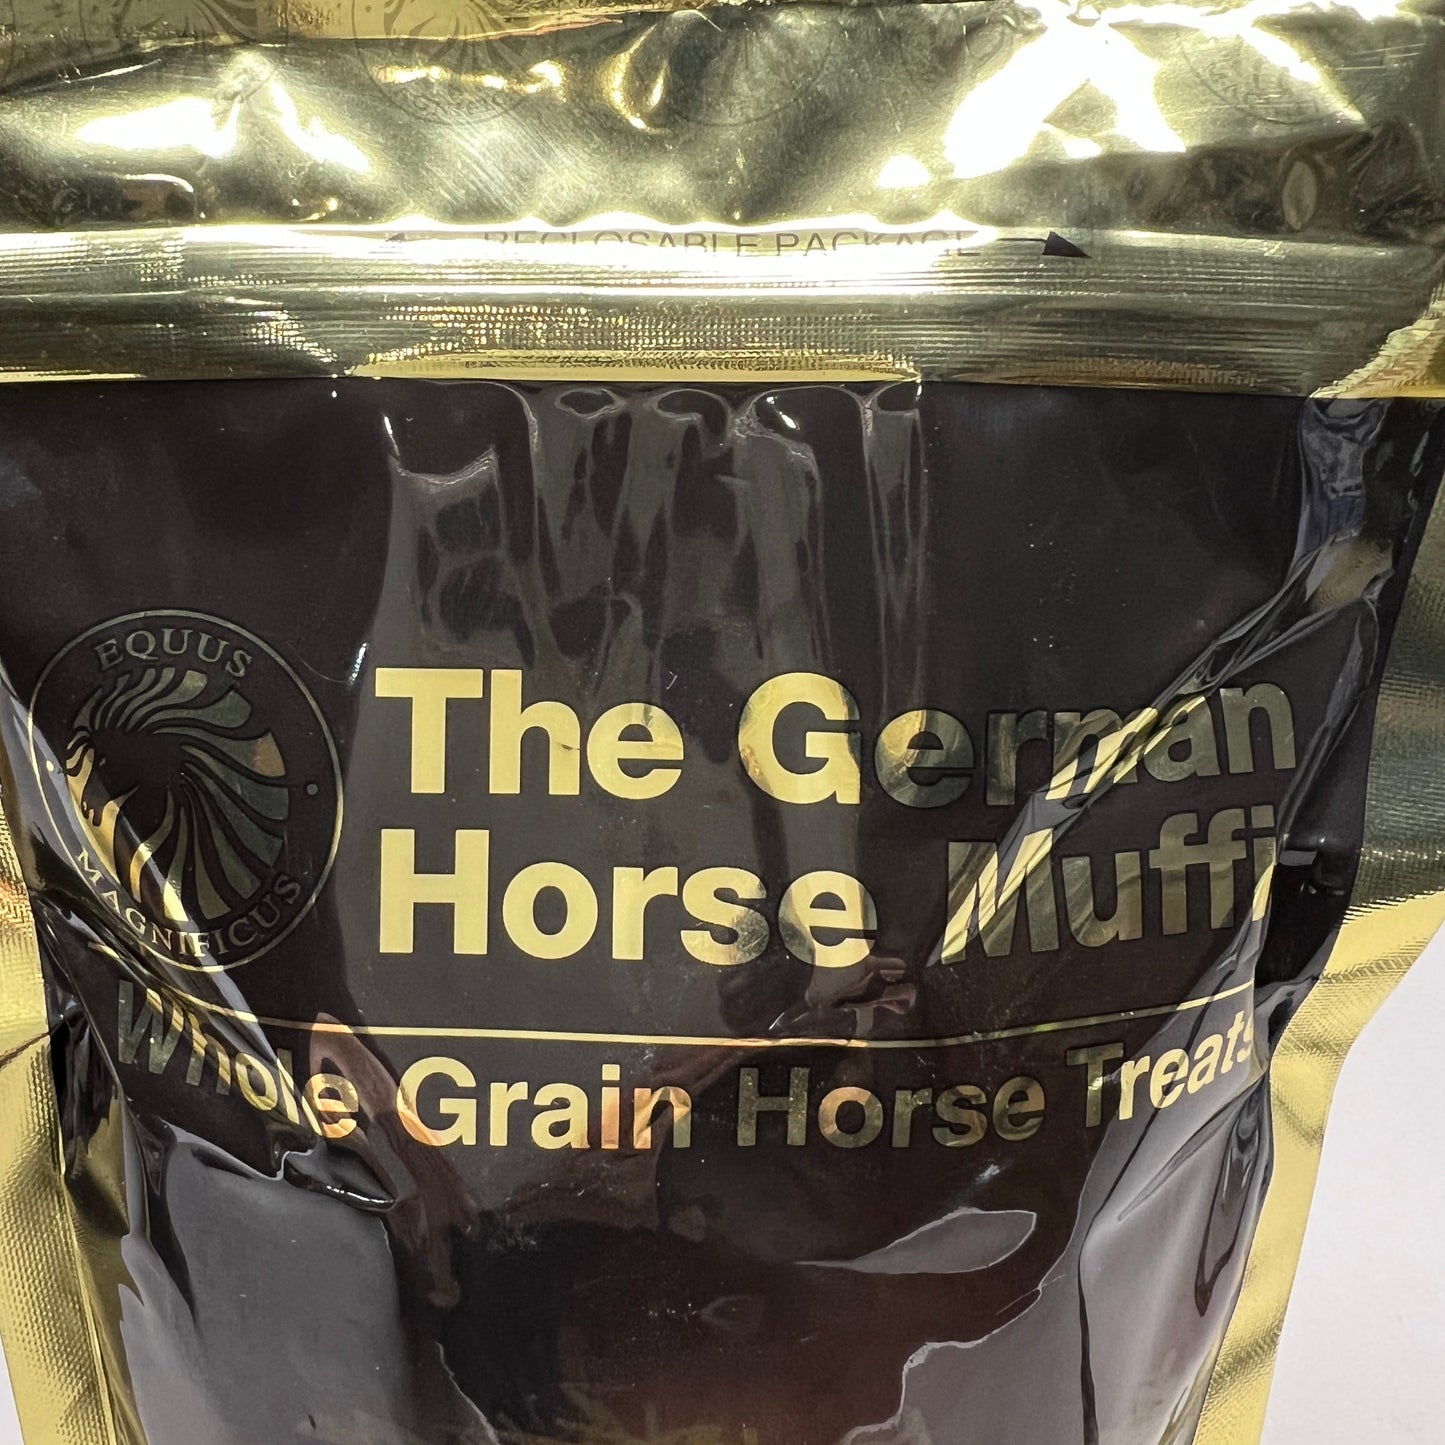 EQUUS MAGNIFICUS The German Horse Muffin Whole Grain Horse Treats 1 lb Bag (New)